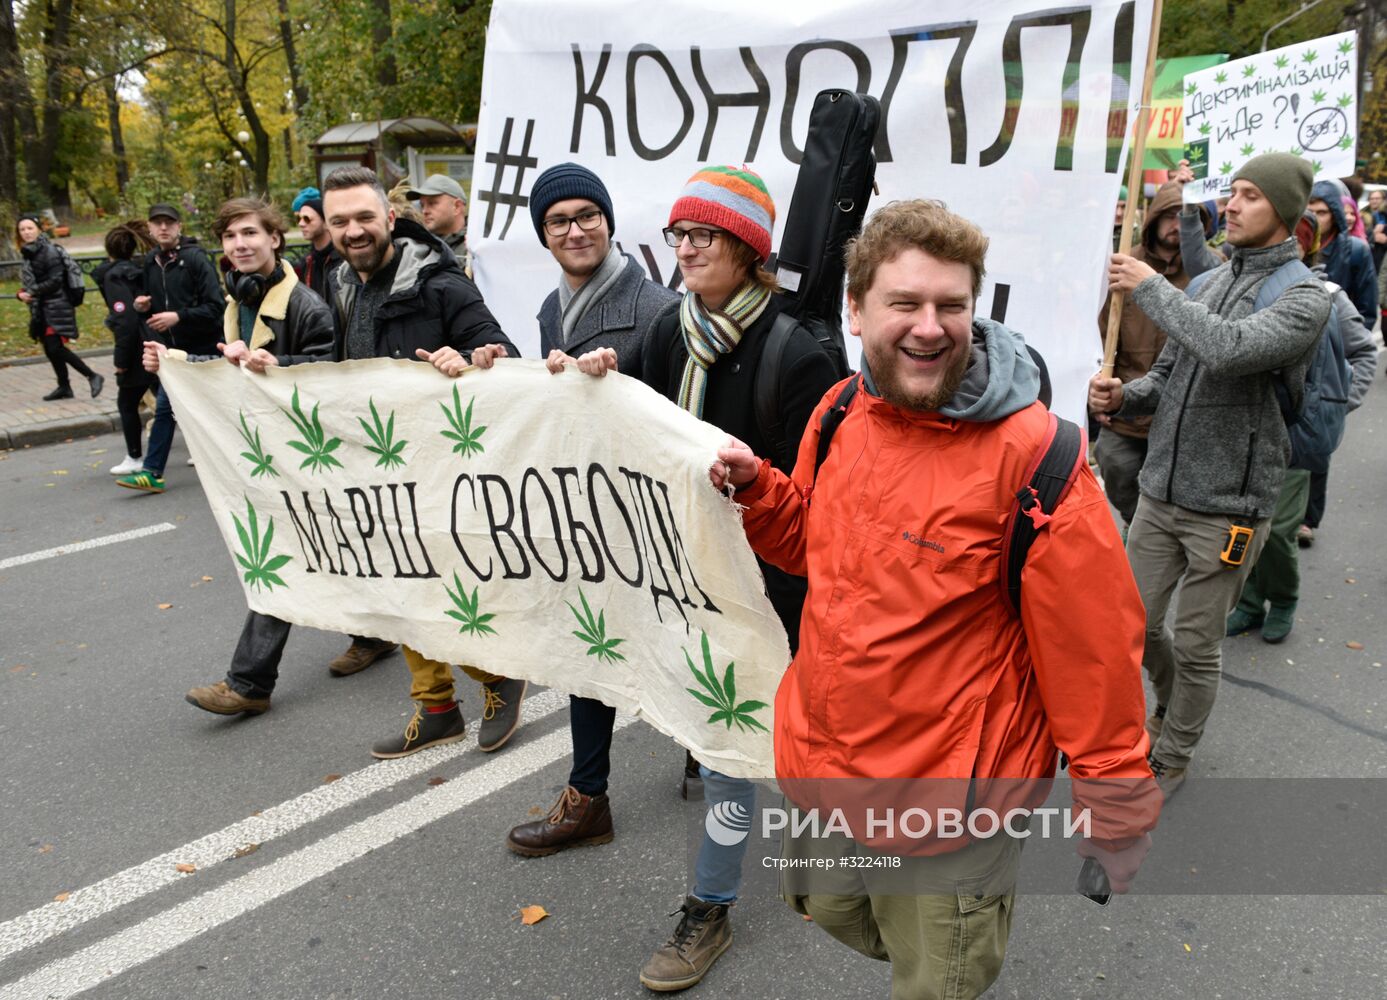 Акция в Киеве с требованием легализации легких наркотиков